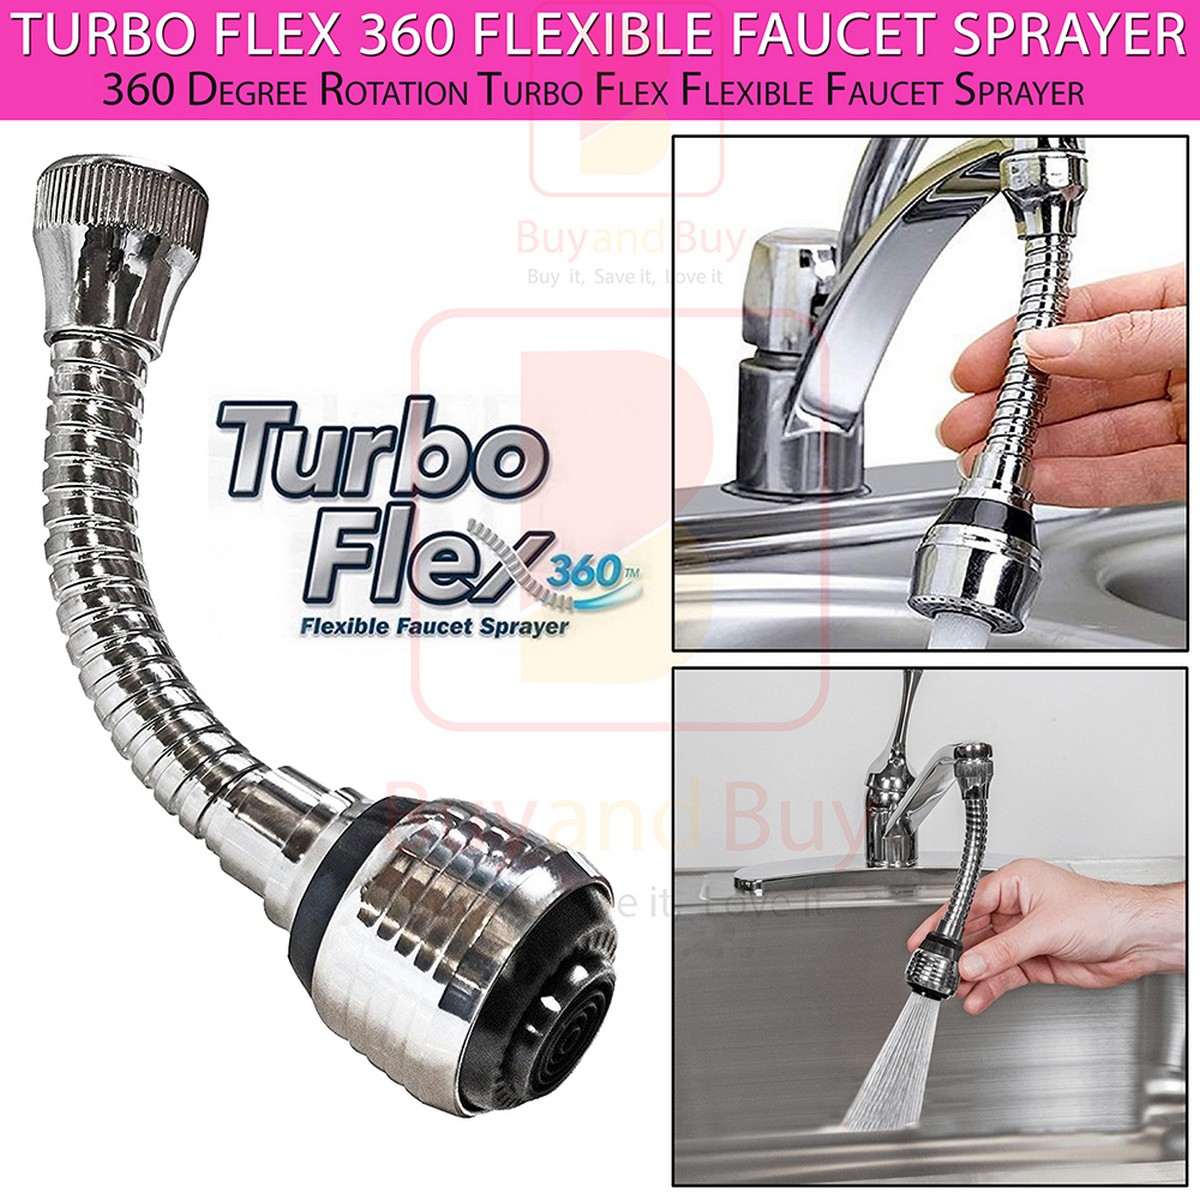 Turbo Flex 360 Flexible Faucet Sprayer Tap Mover Instant Hands Free Swivel Spray